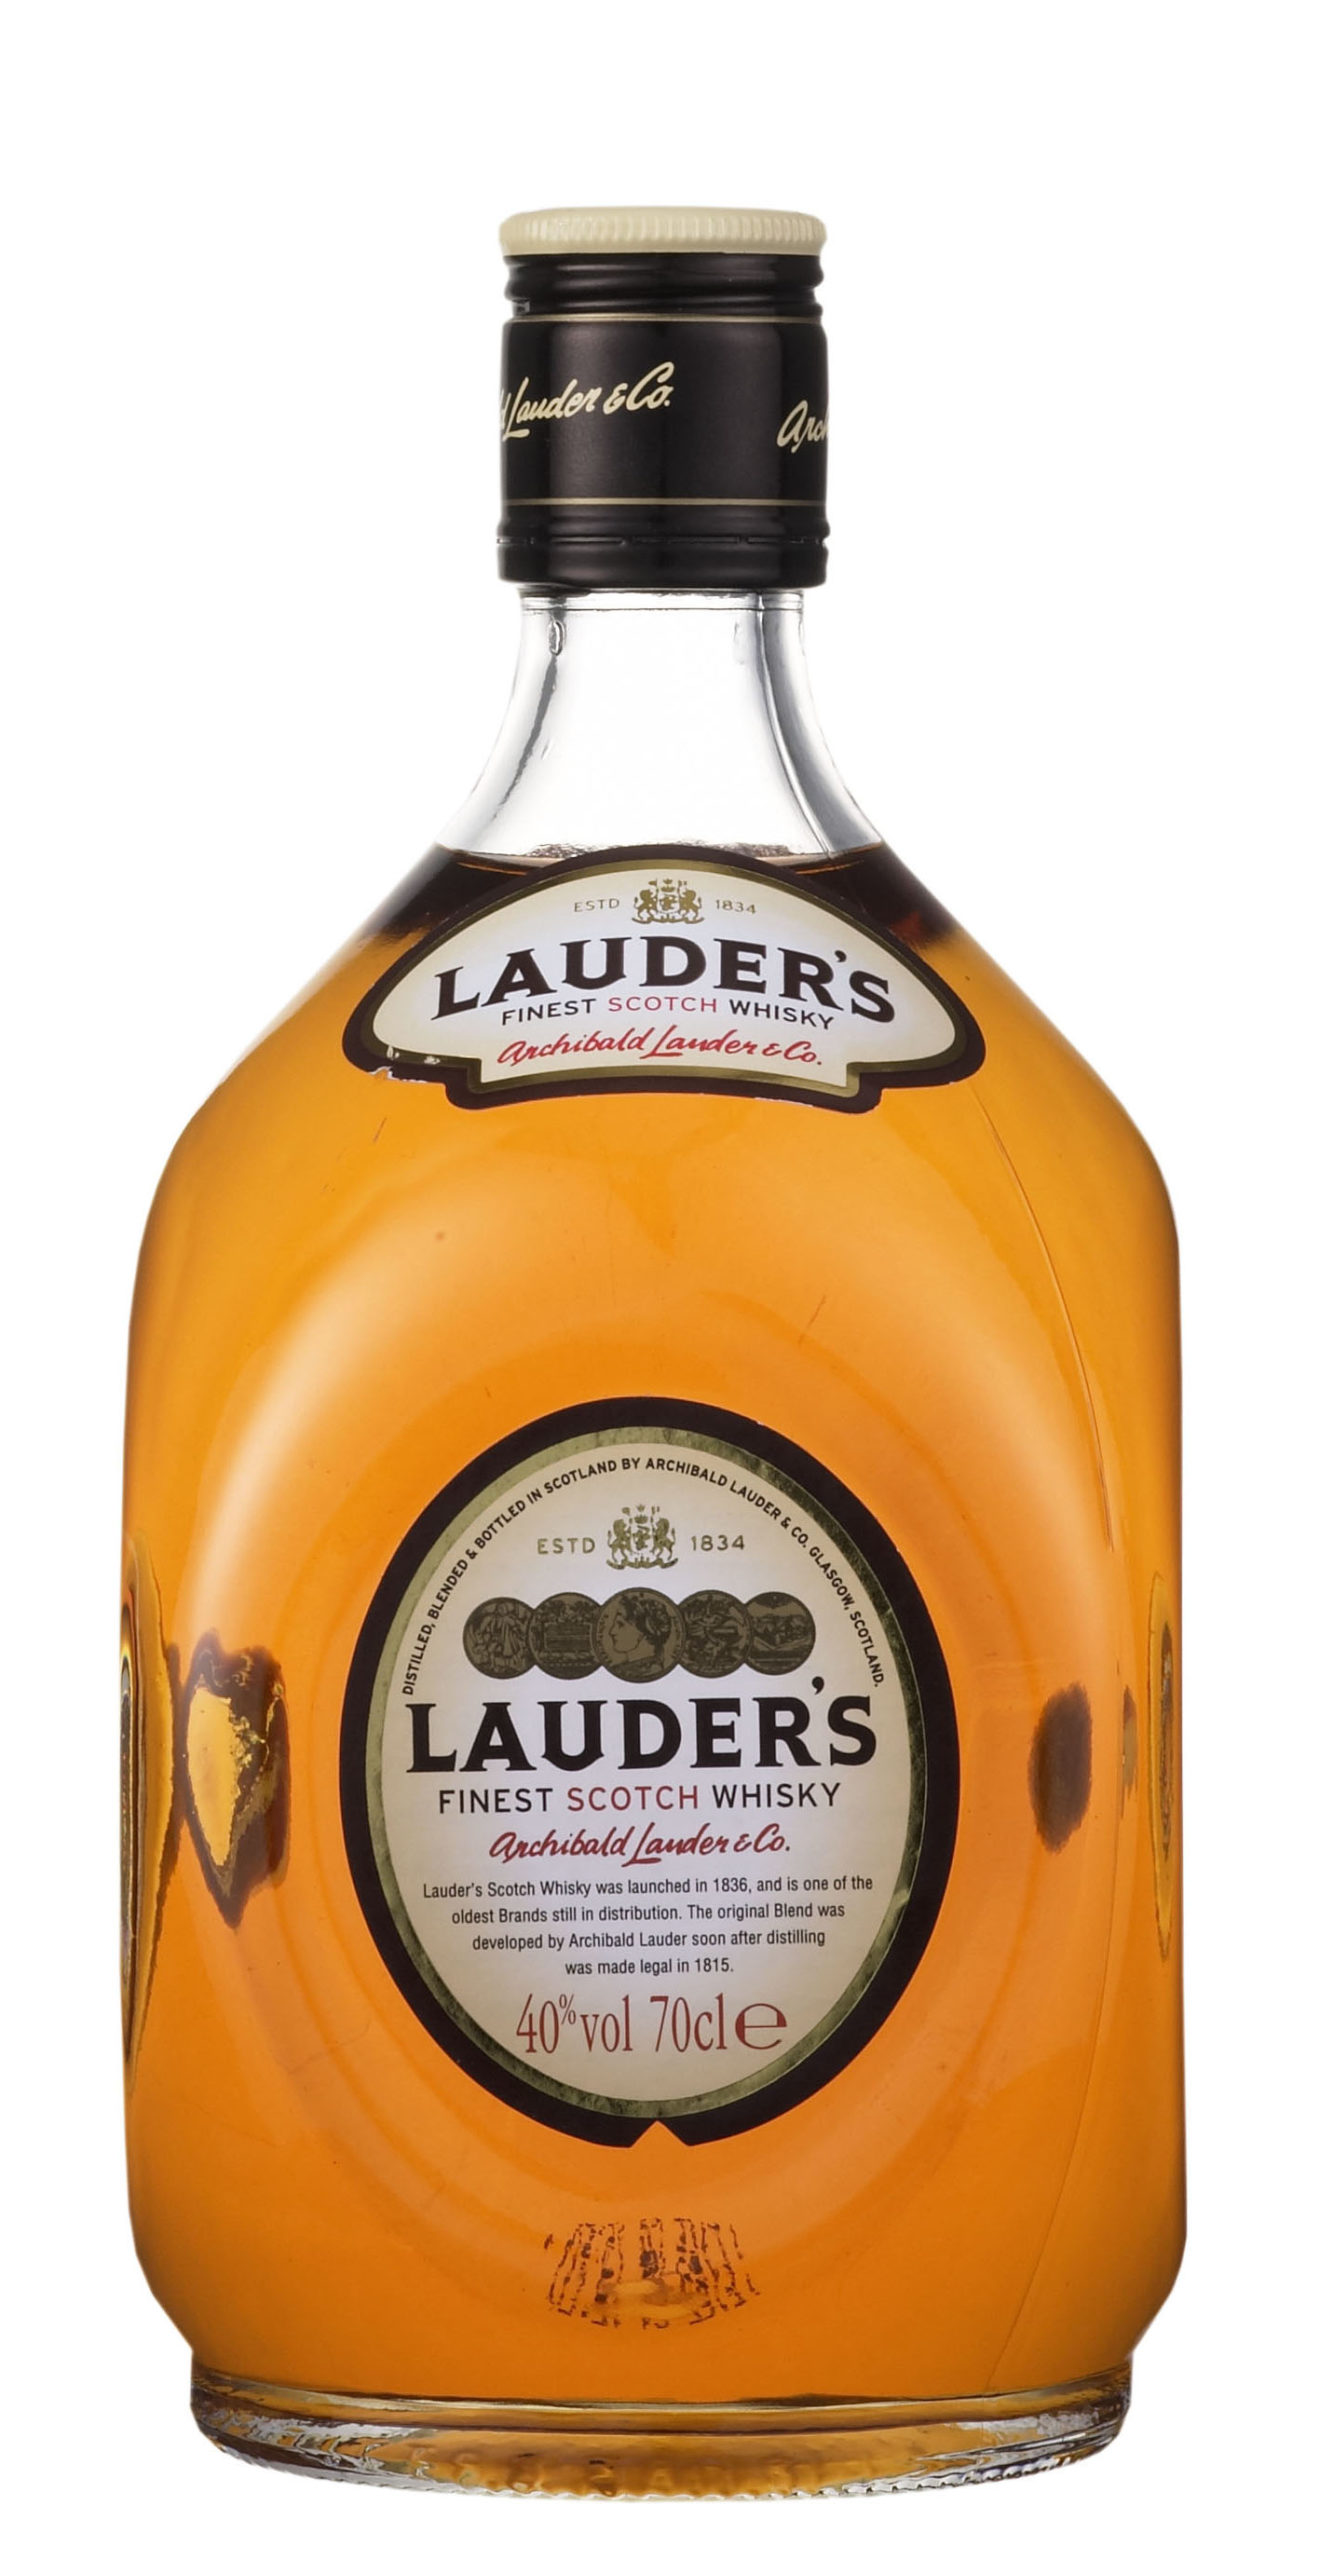 Lauder’s Finest Scotch Whisky